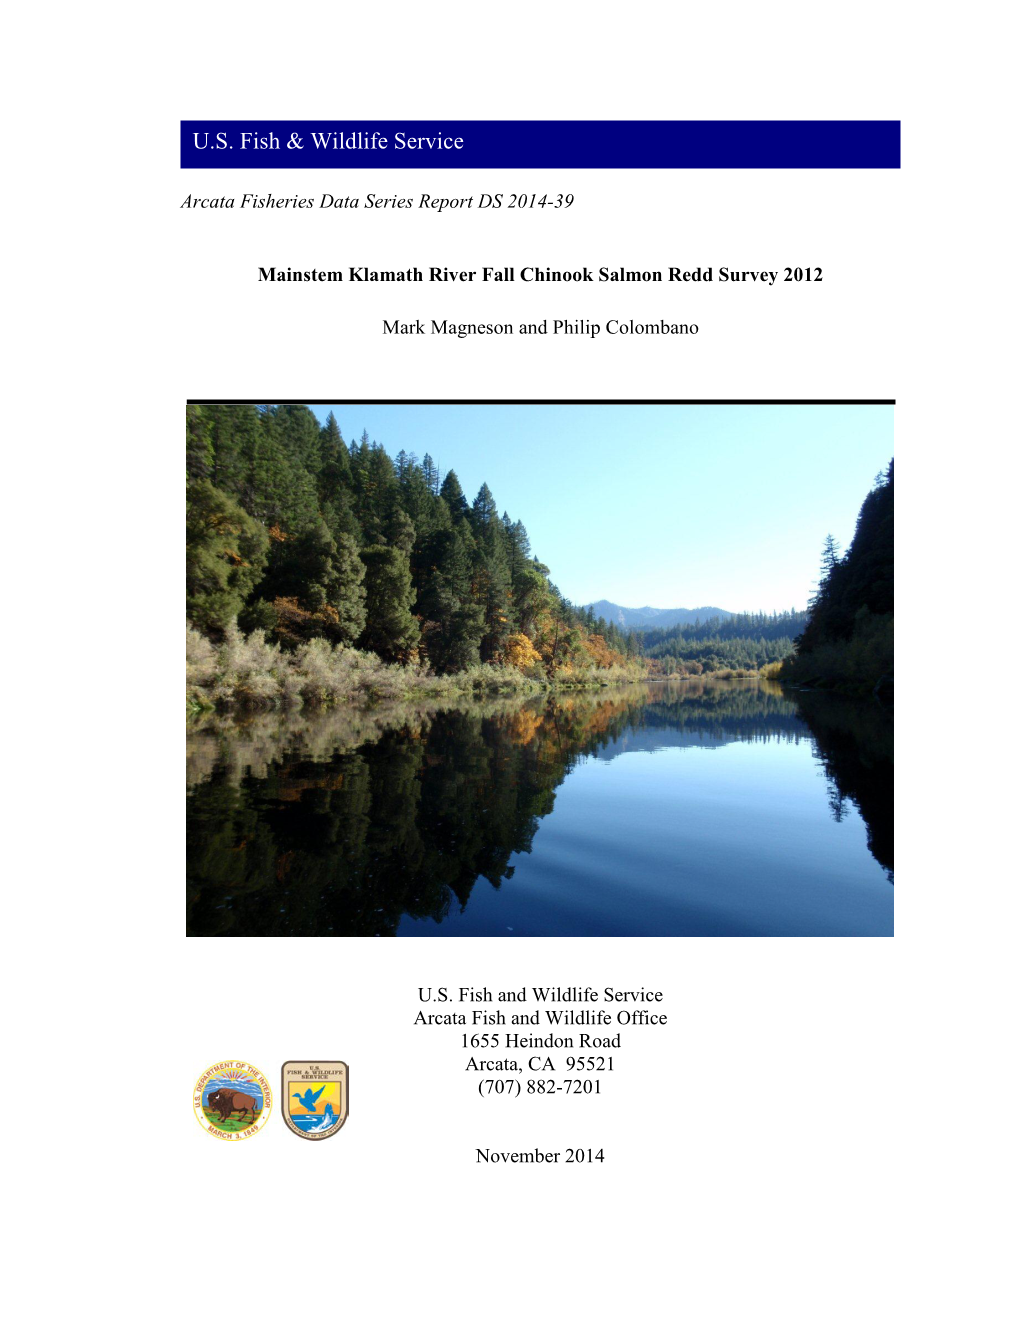 Mainstem Klamath River Fall Chinook Salmon Redd Survey 2012